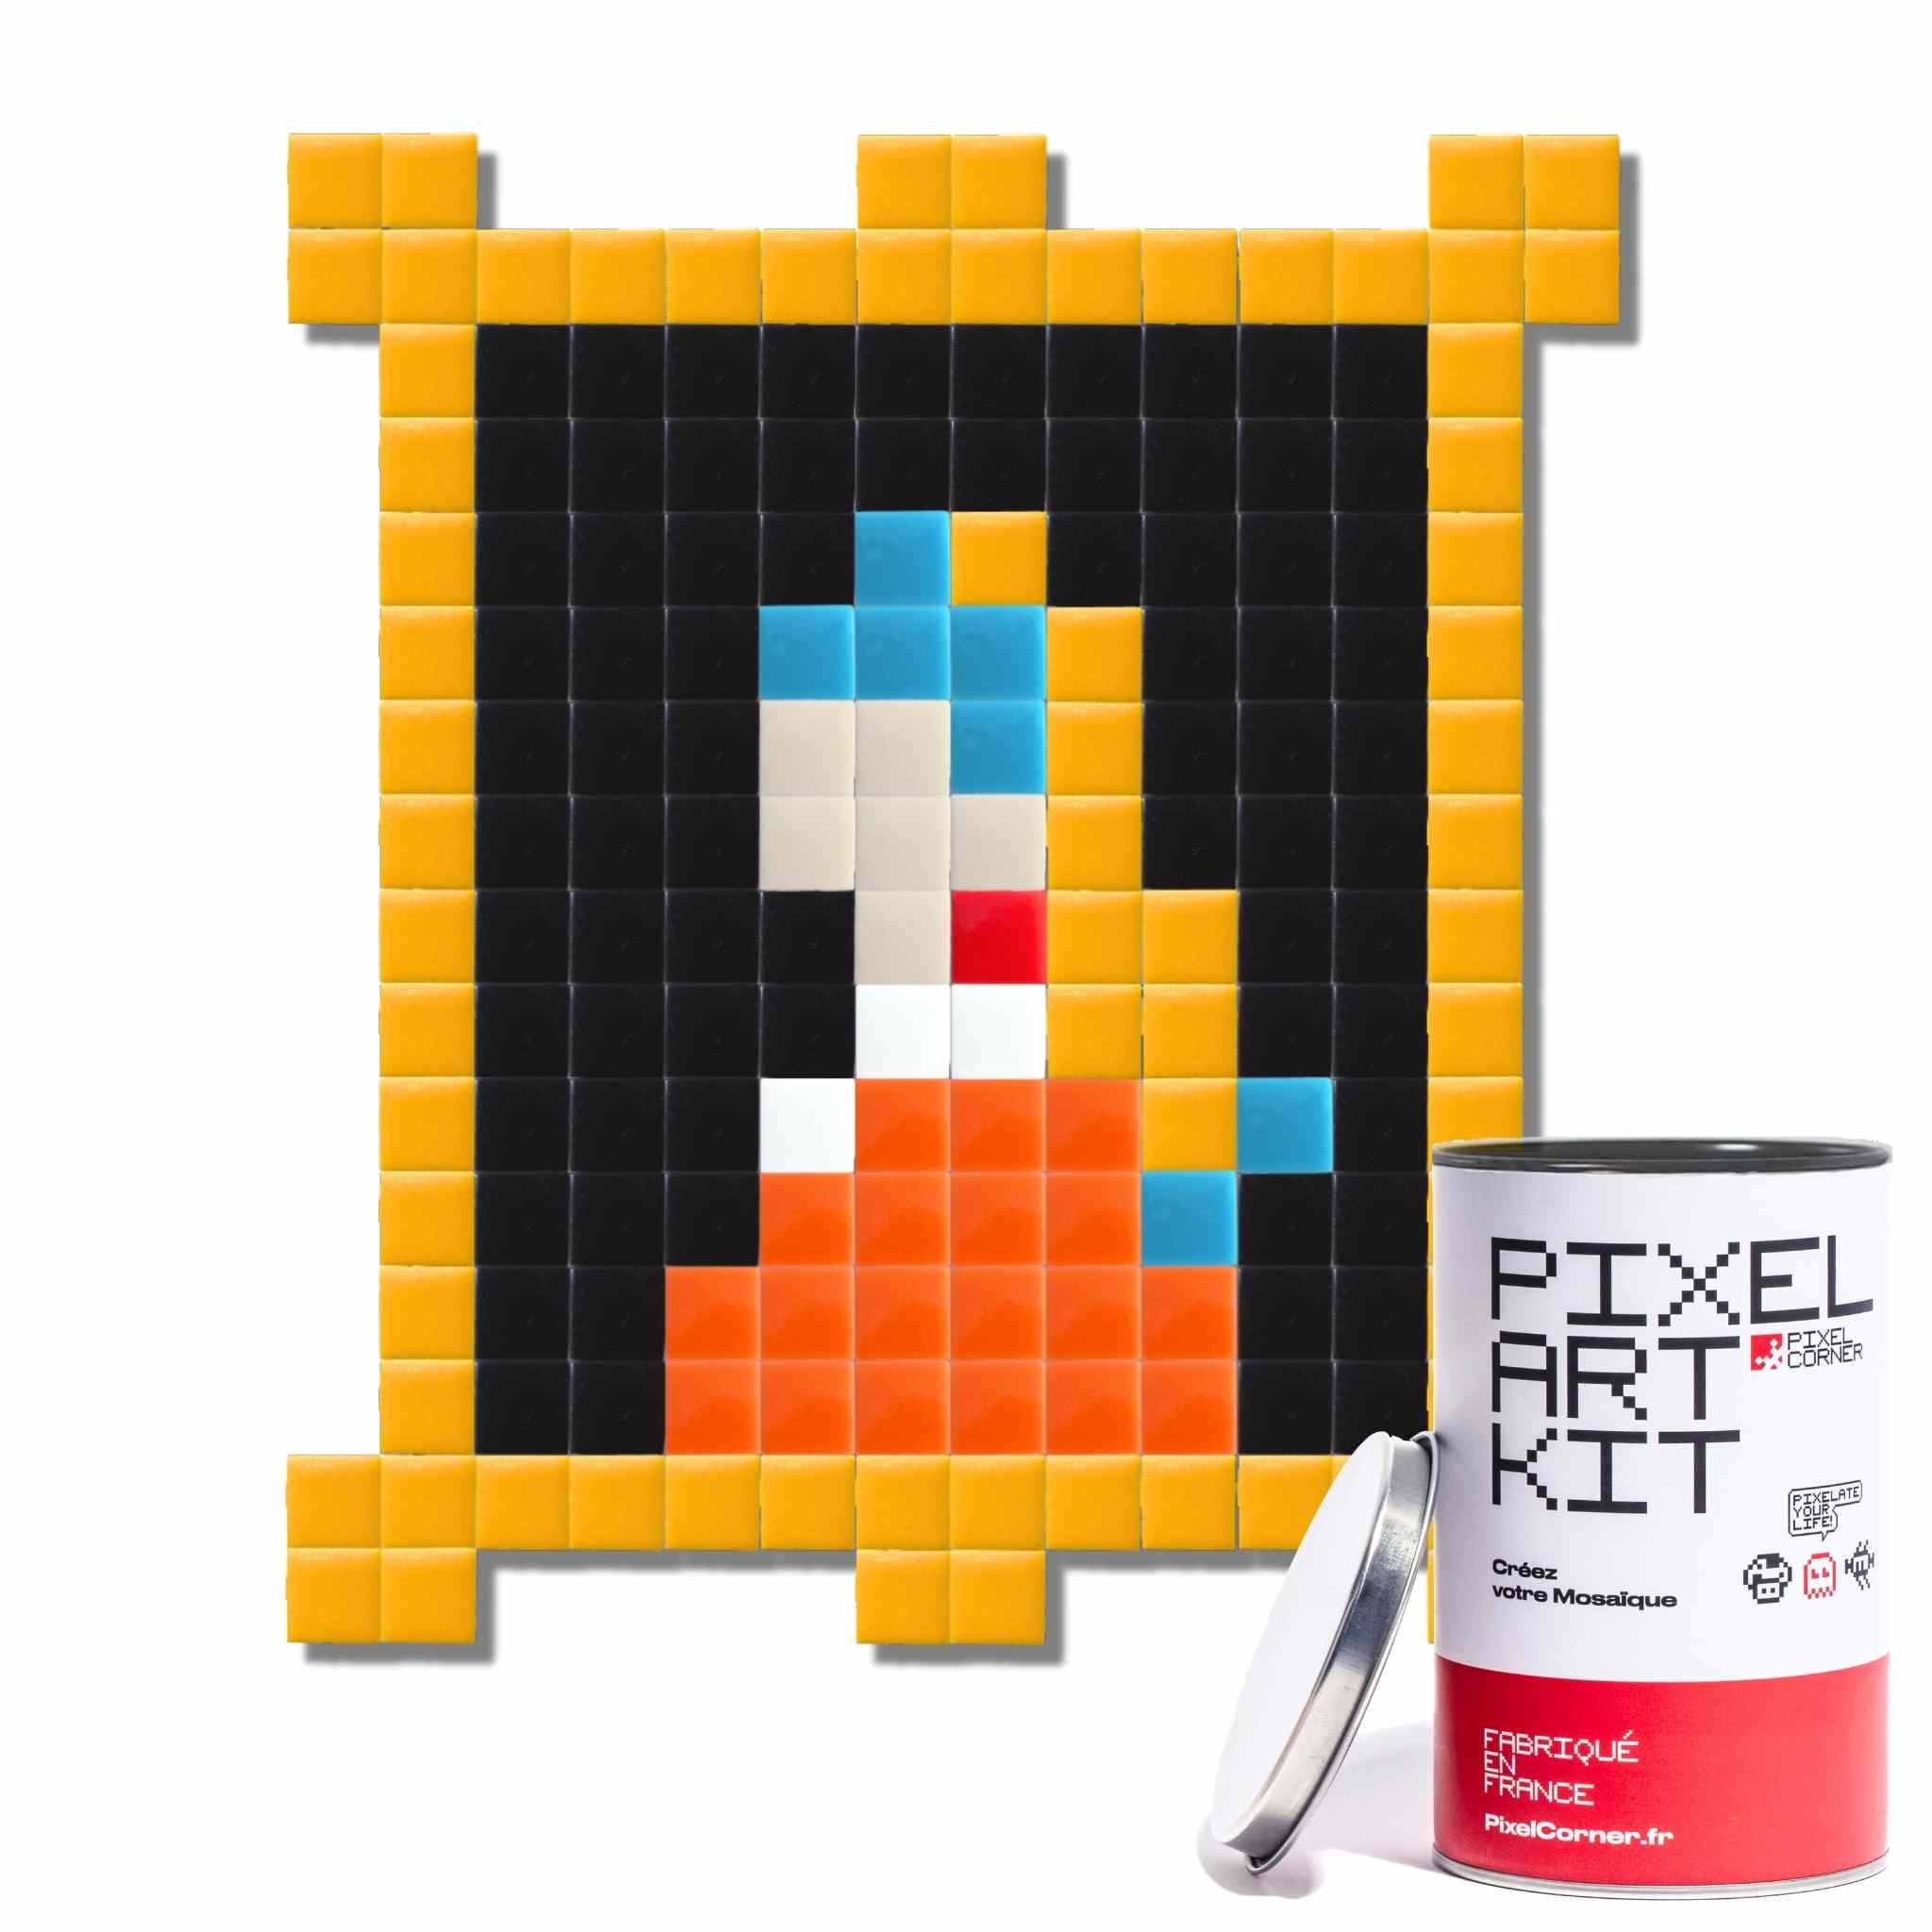 Pixel Art Kit "Girl with a Pearl" par Pixel Corner - Kits de loisirs créatifs